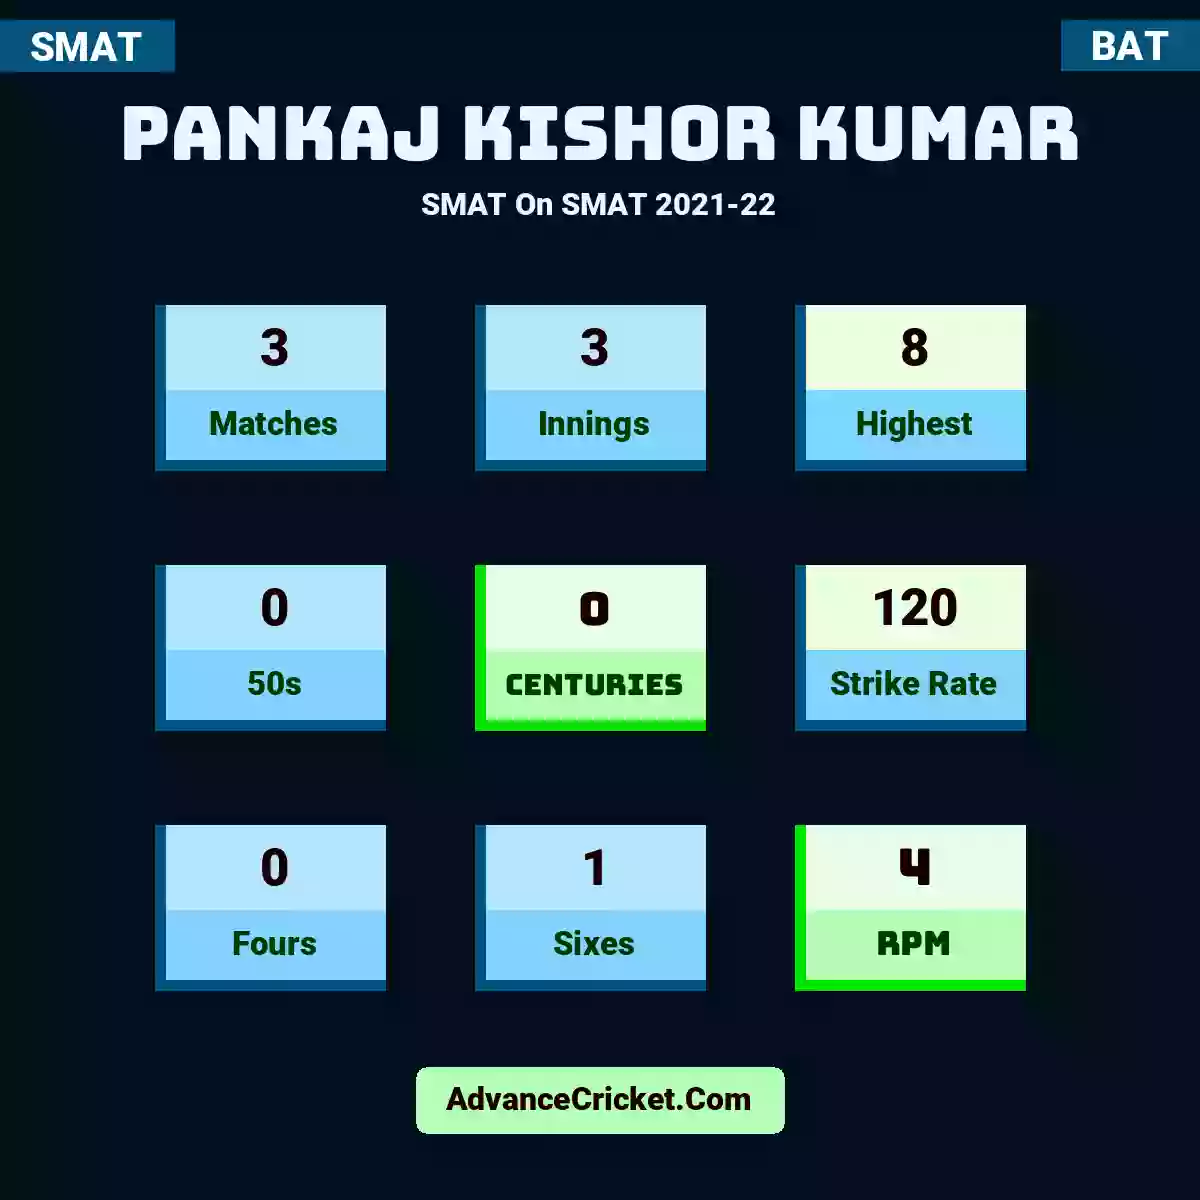 Pankaj Kishor Kumar SMAT  On SMAT 2021-22, Pankaj Kishor Kumar played 3 matches, scored 8 runs as highest, 0 half-centuries, and 0 centuries, with a strike rate of 120. P.Kumar hit 0 fours and 1 sixes, with an RPM of 4.